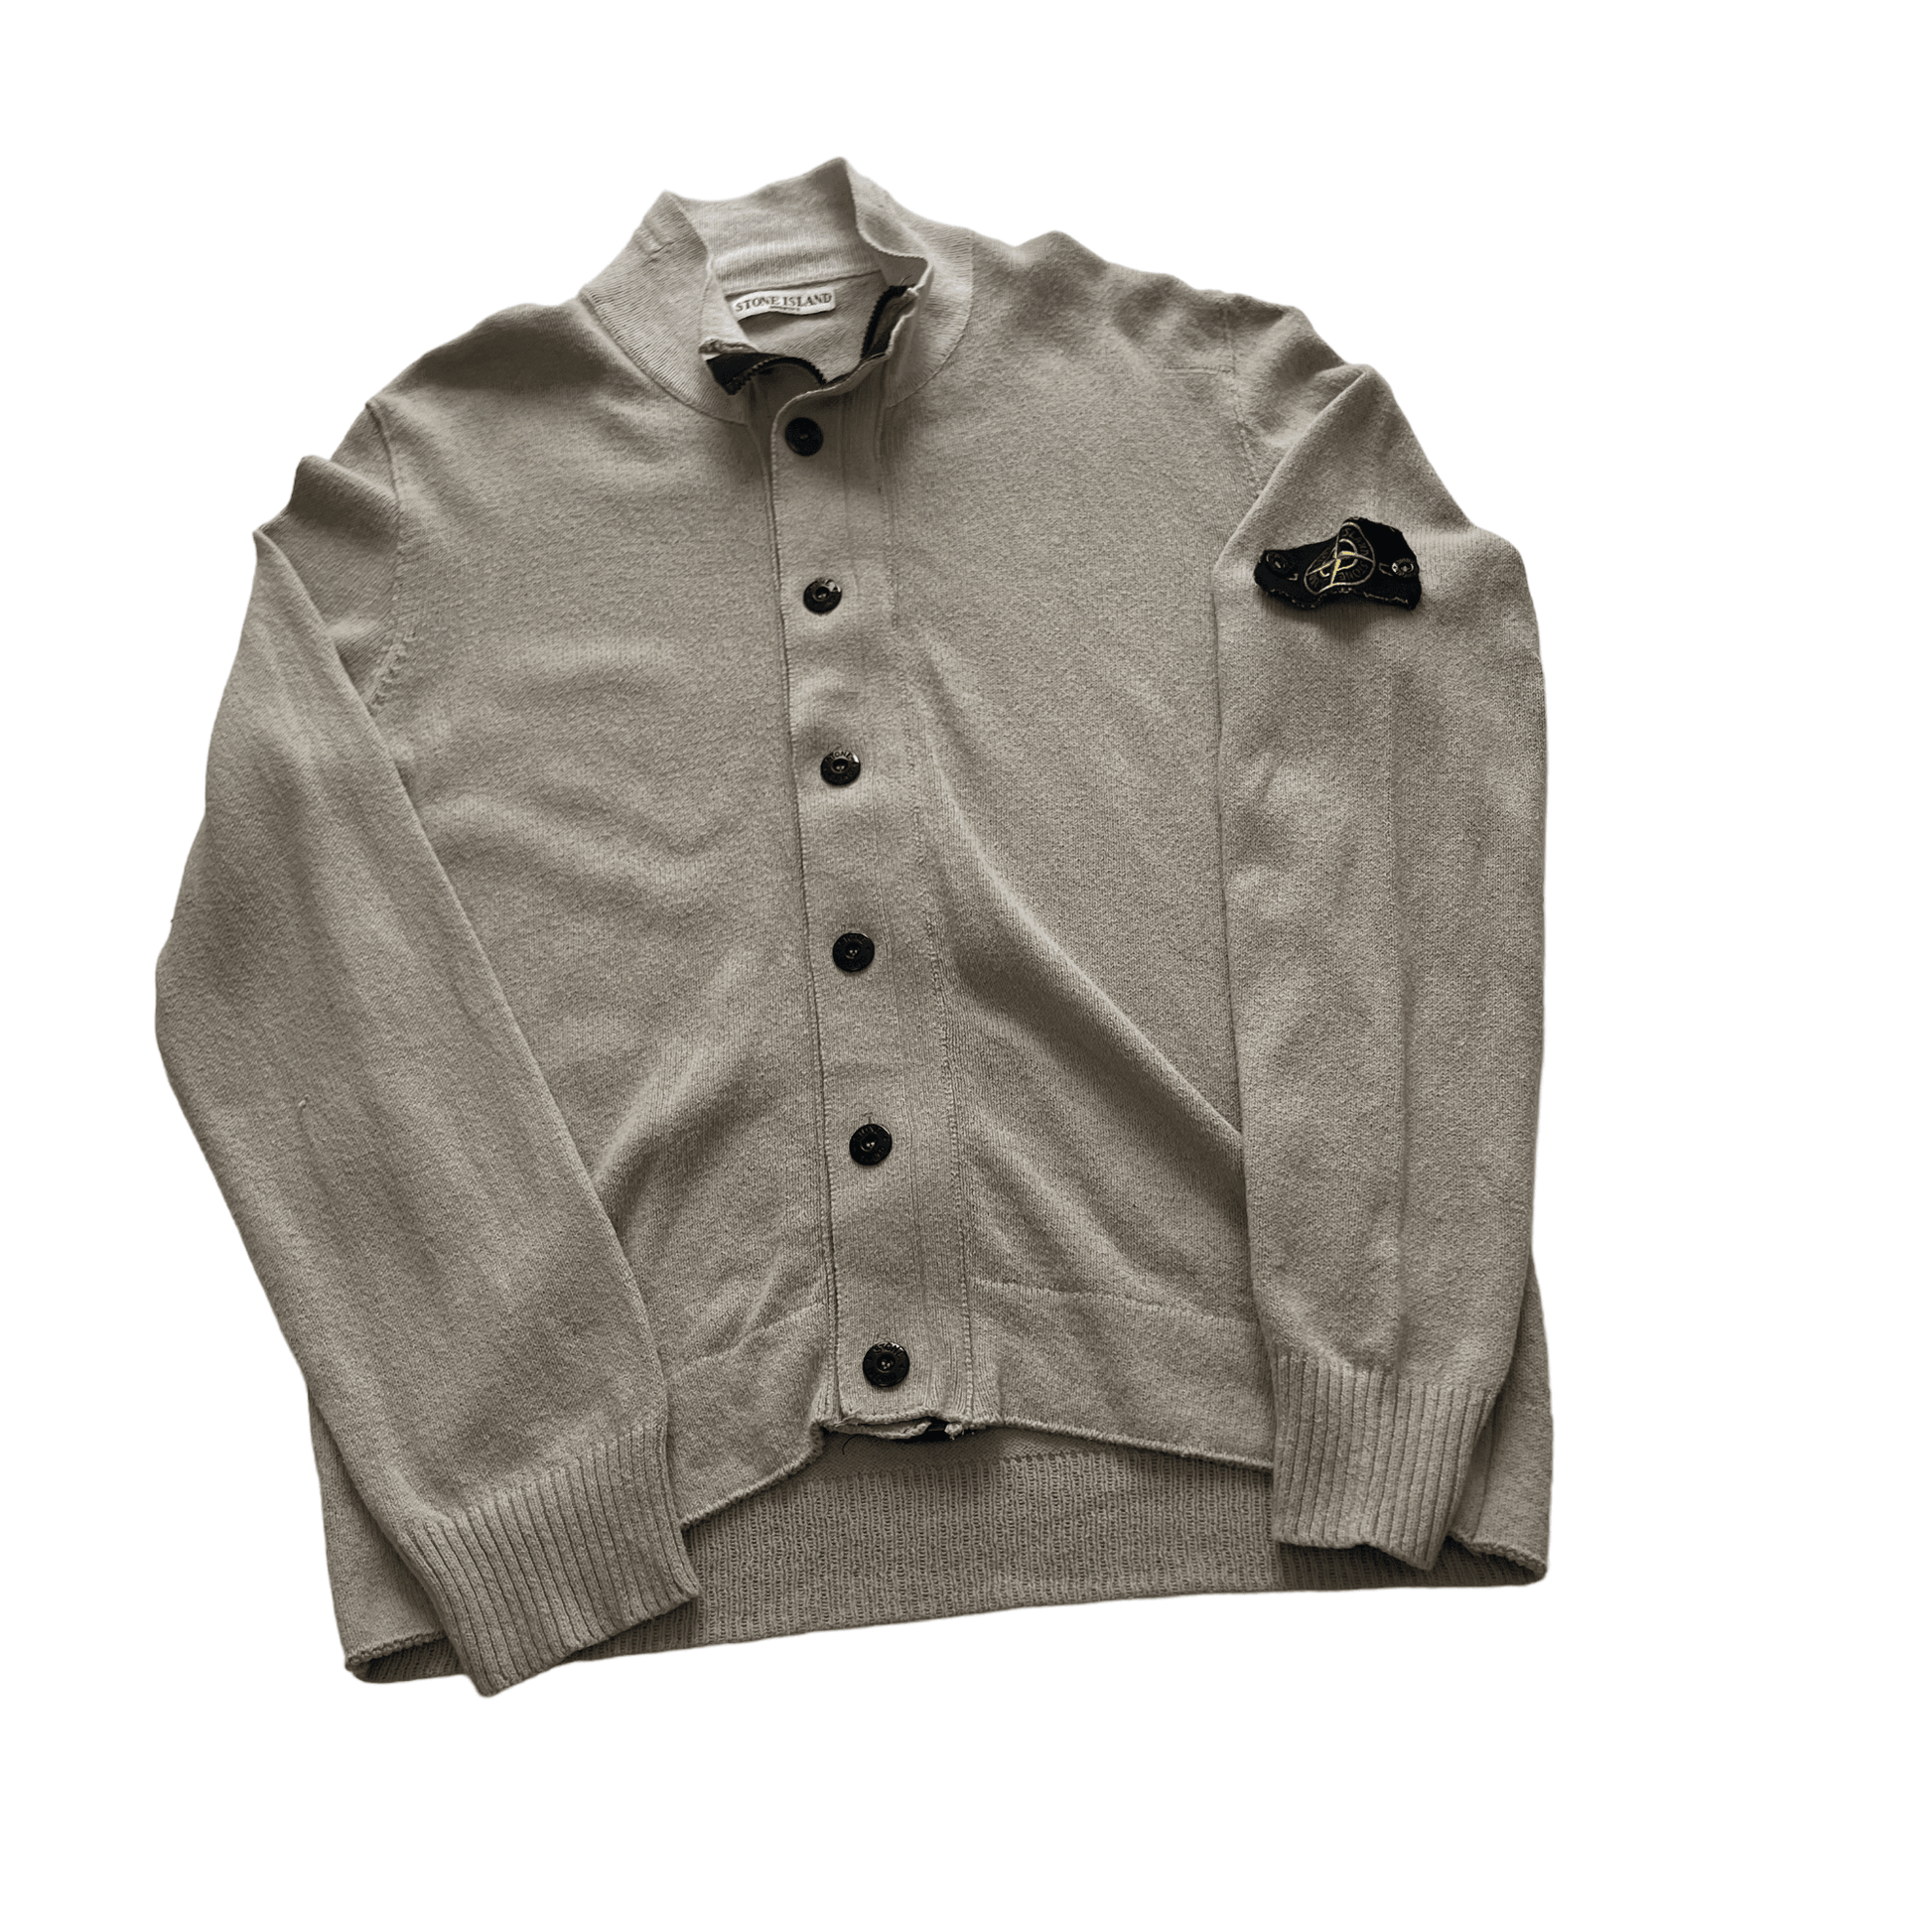 Vintage Grey Stone Island Full Zip Jacket - Extra Large - The Streetwear Studio